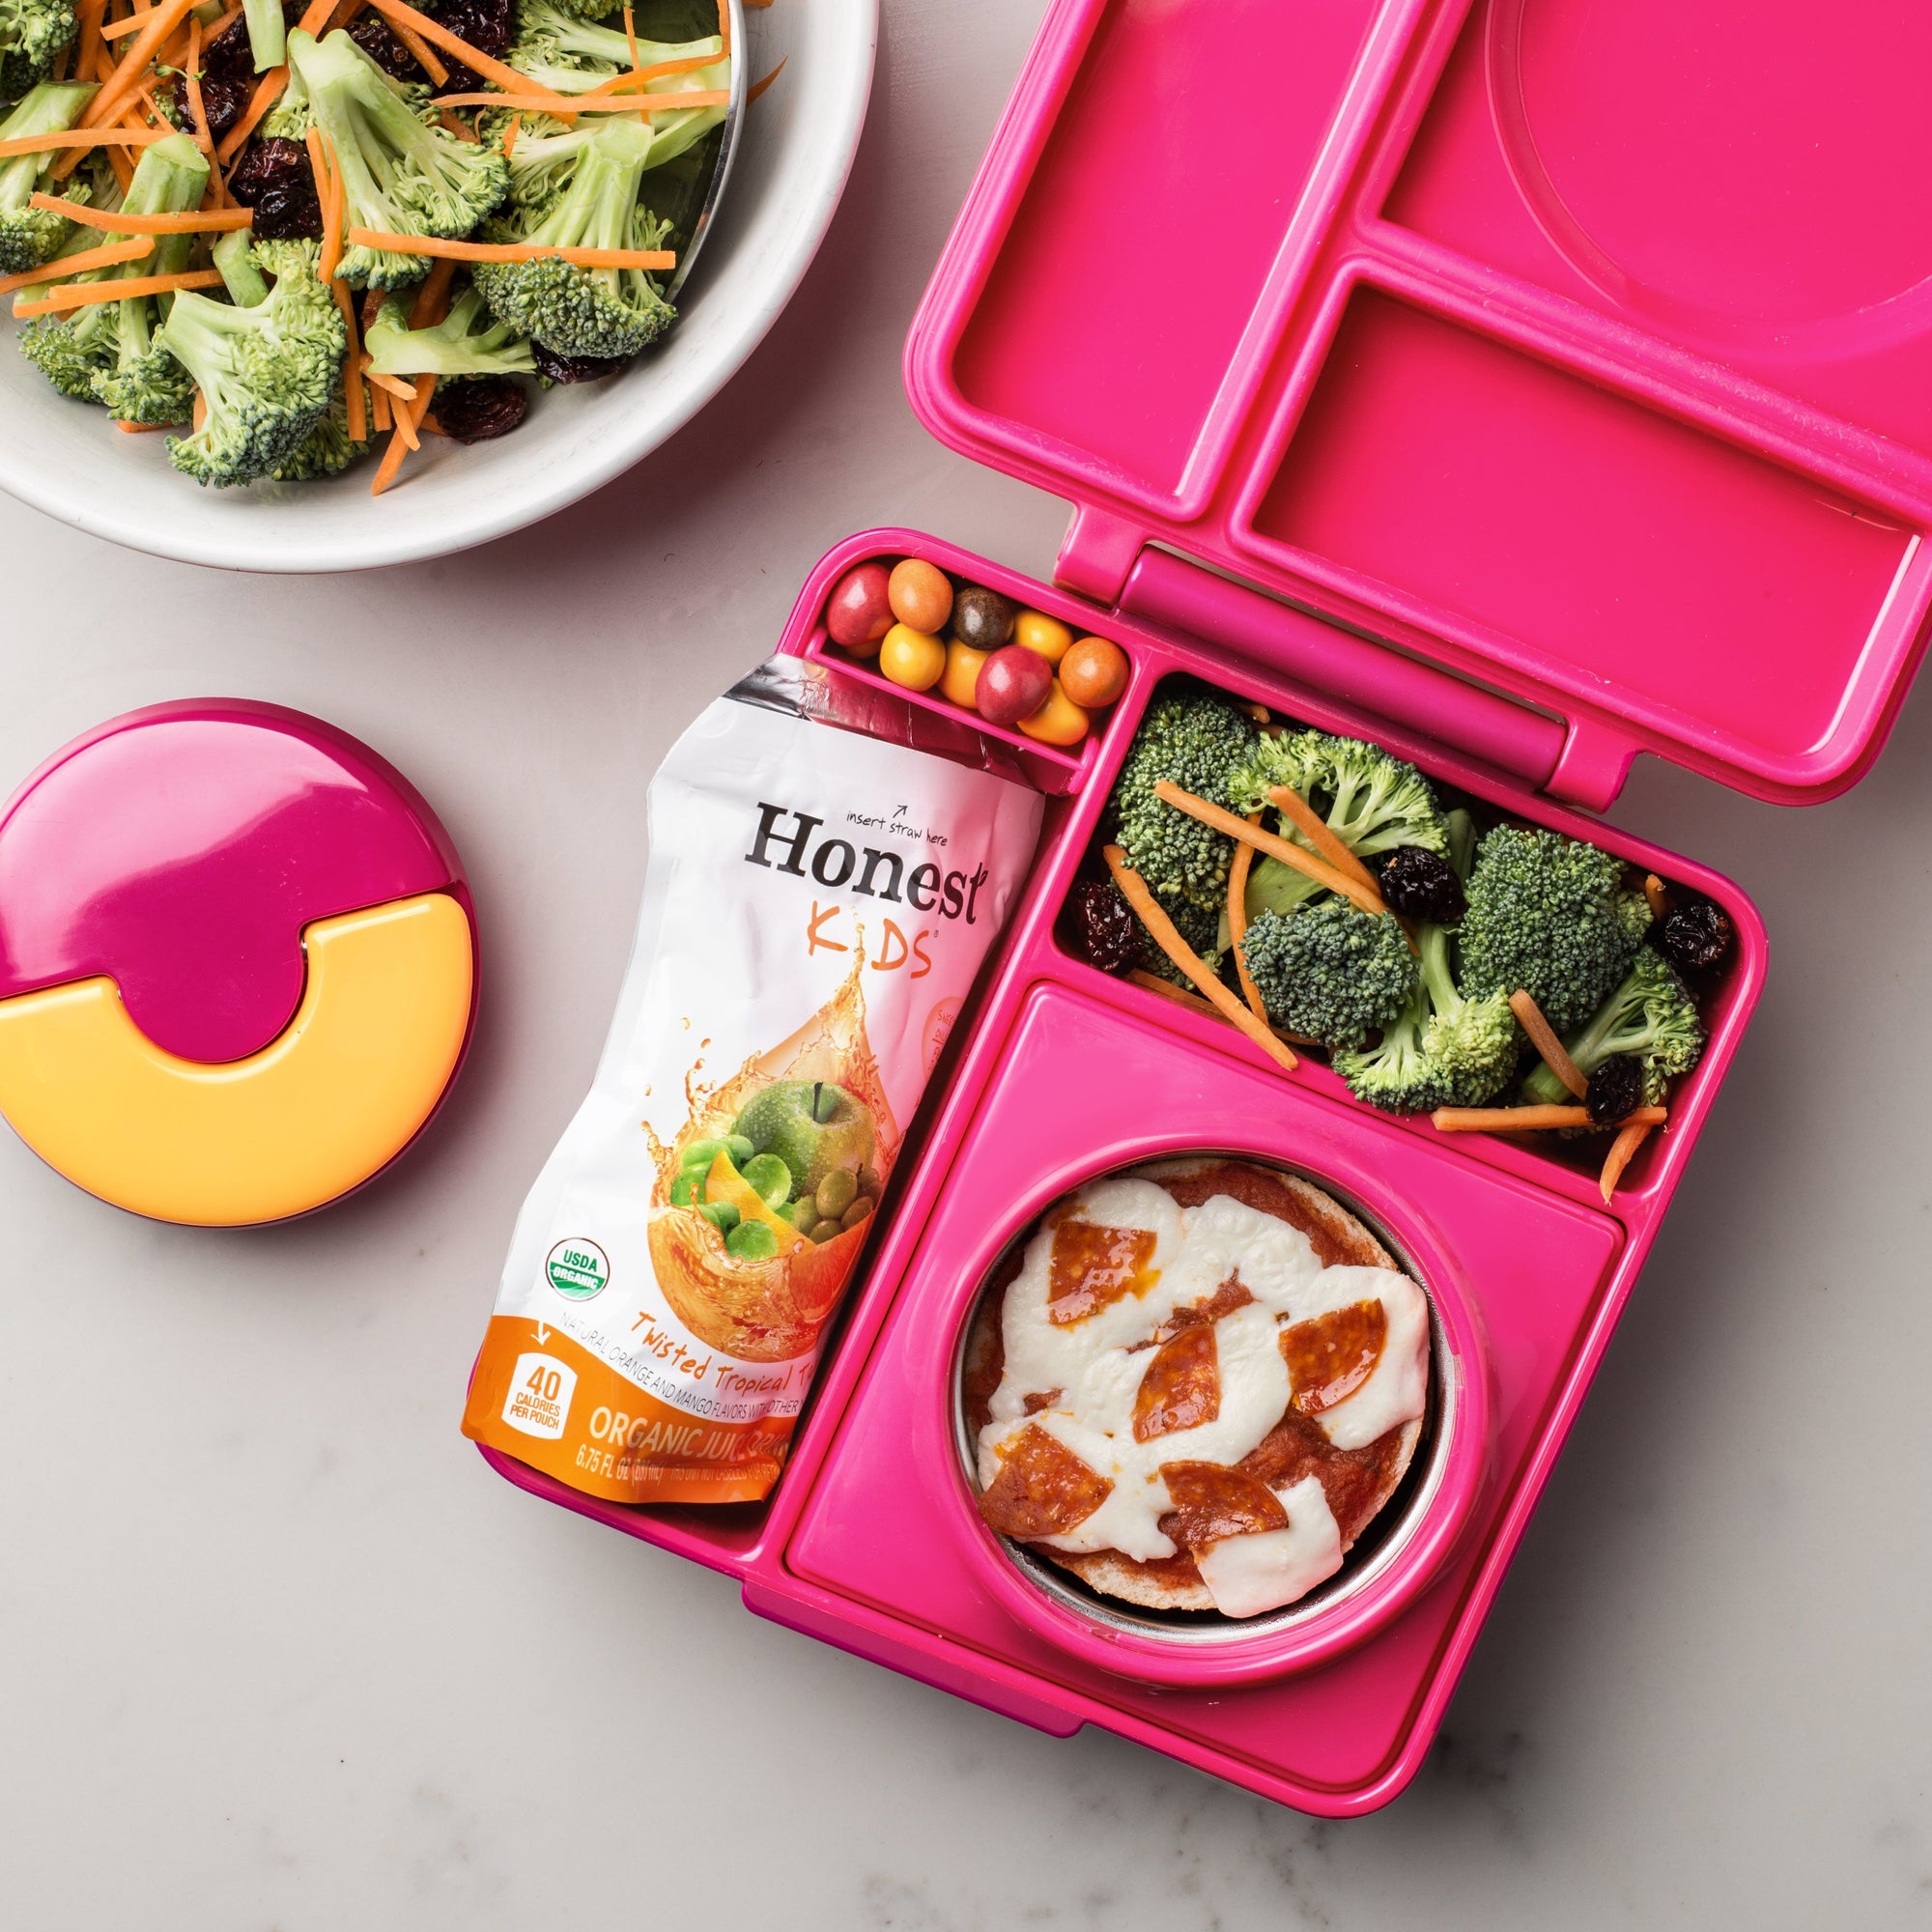 OmieBox Bento Lunch Box, Pink Berry